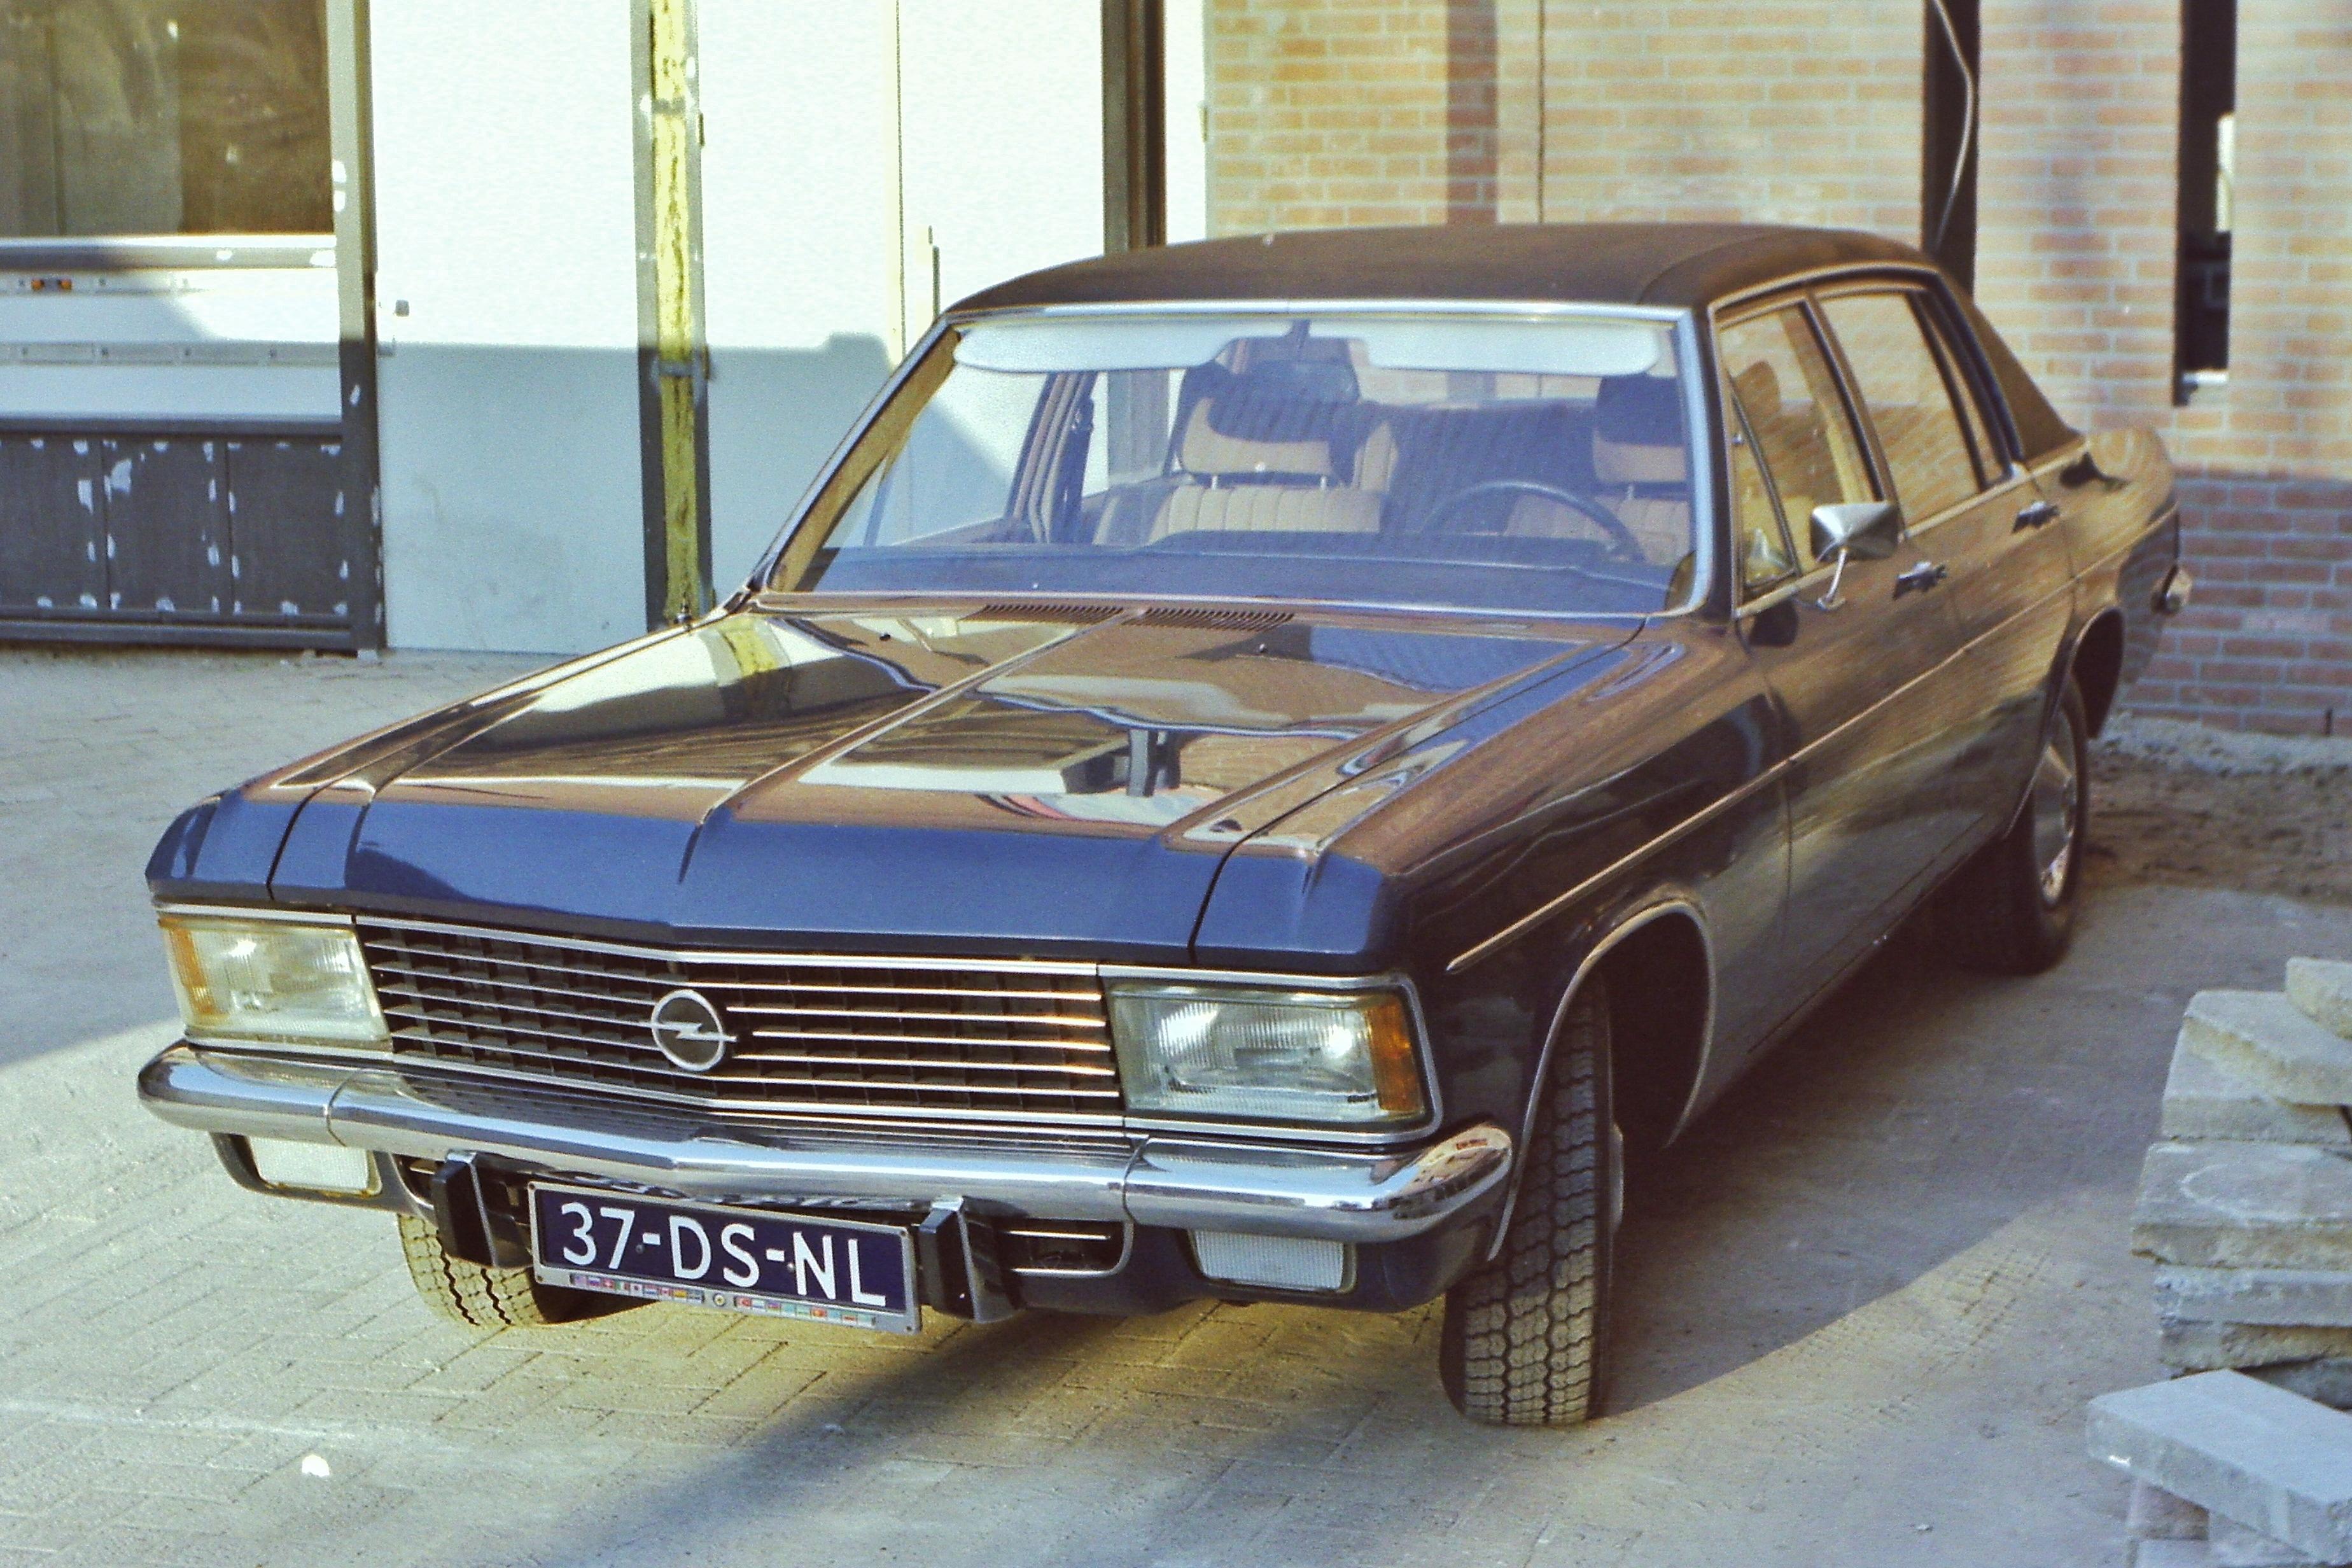 My 1975 Opel Admiral 